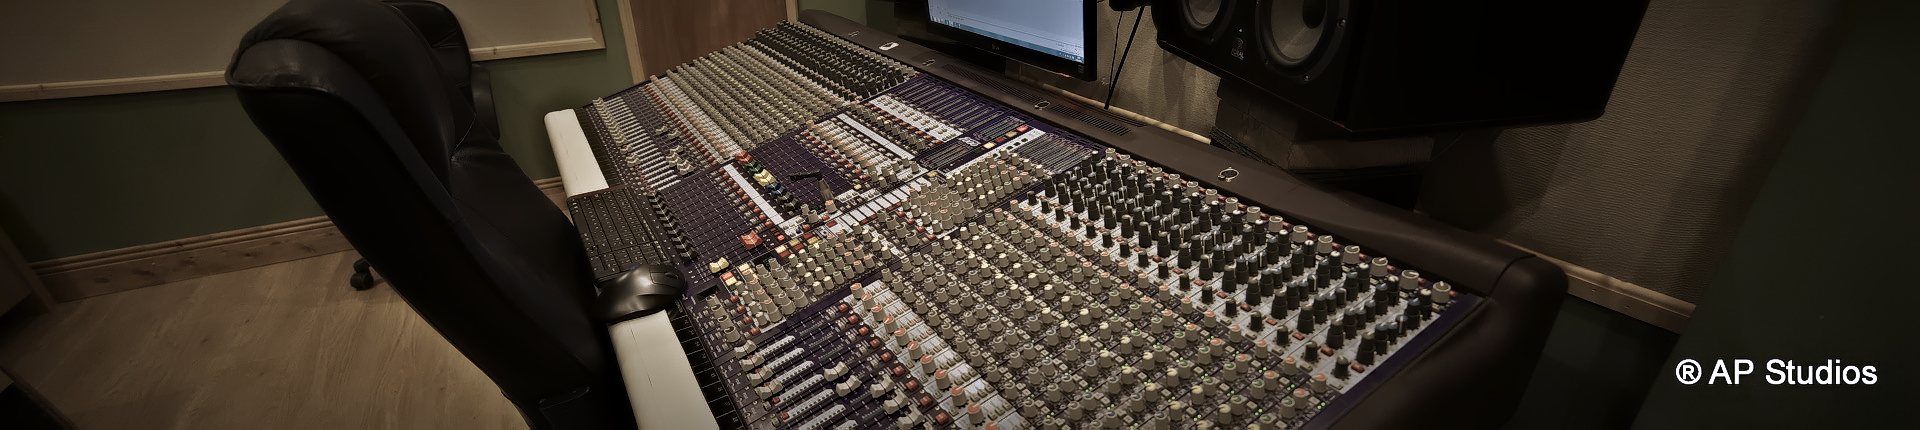 AP Recording Studios Dublin Midas Heritage 1000 Desk side view